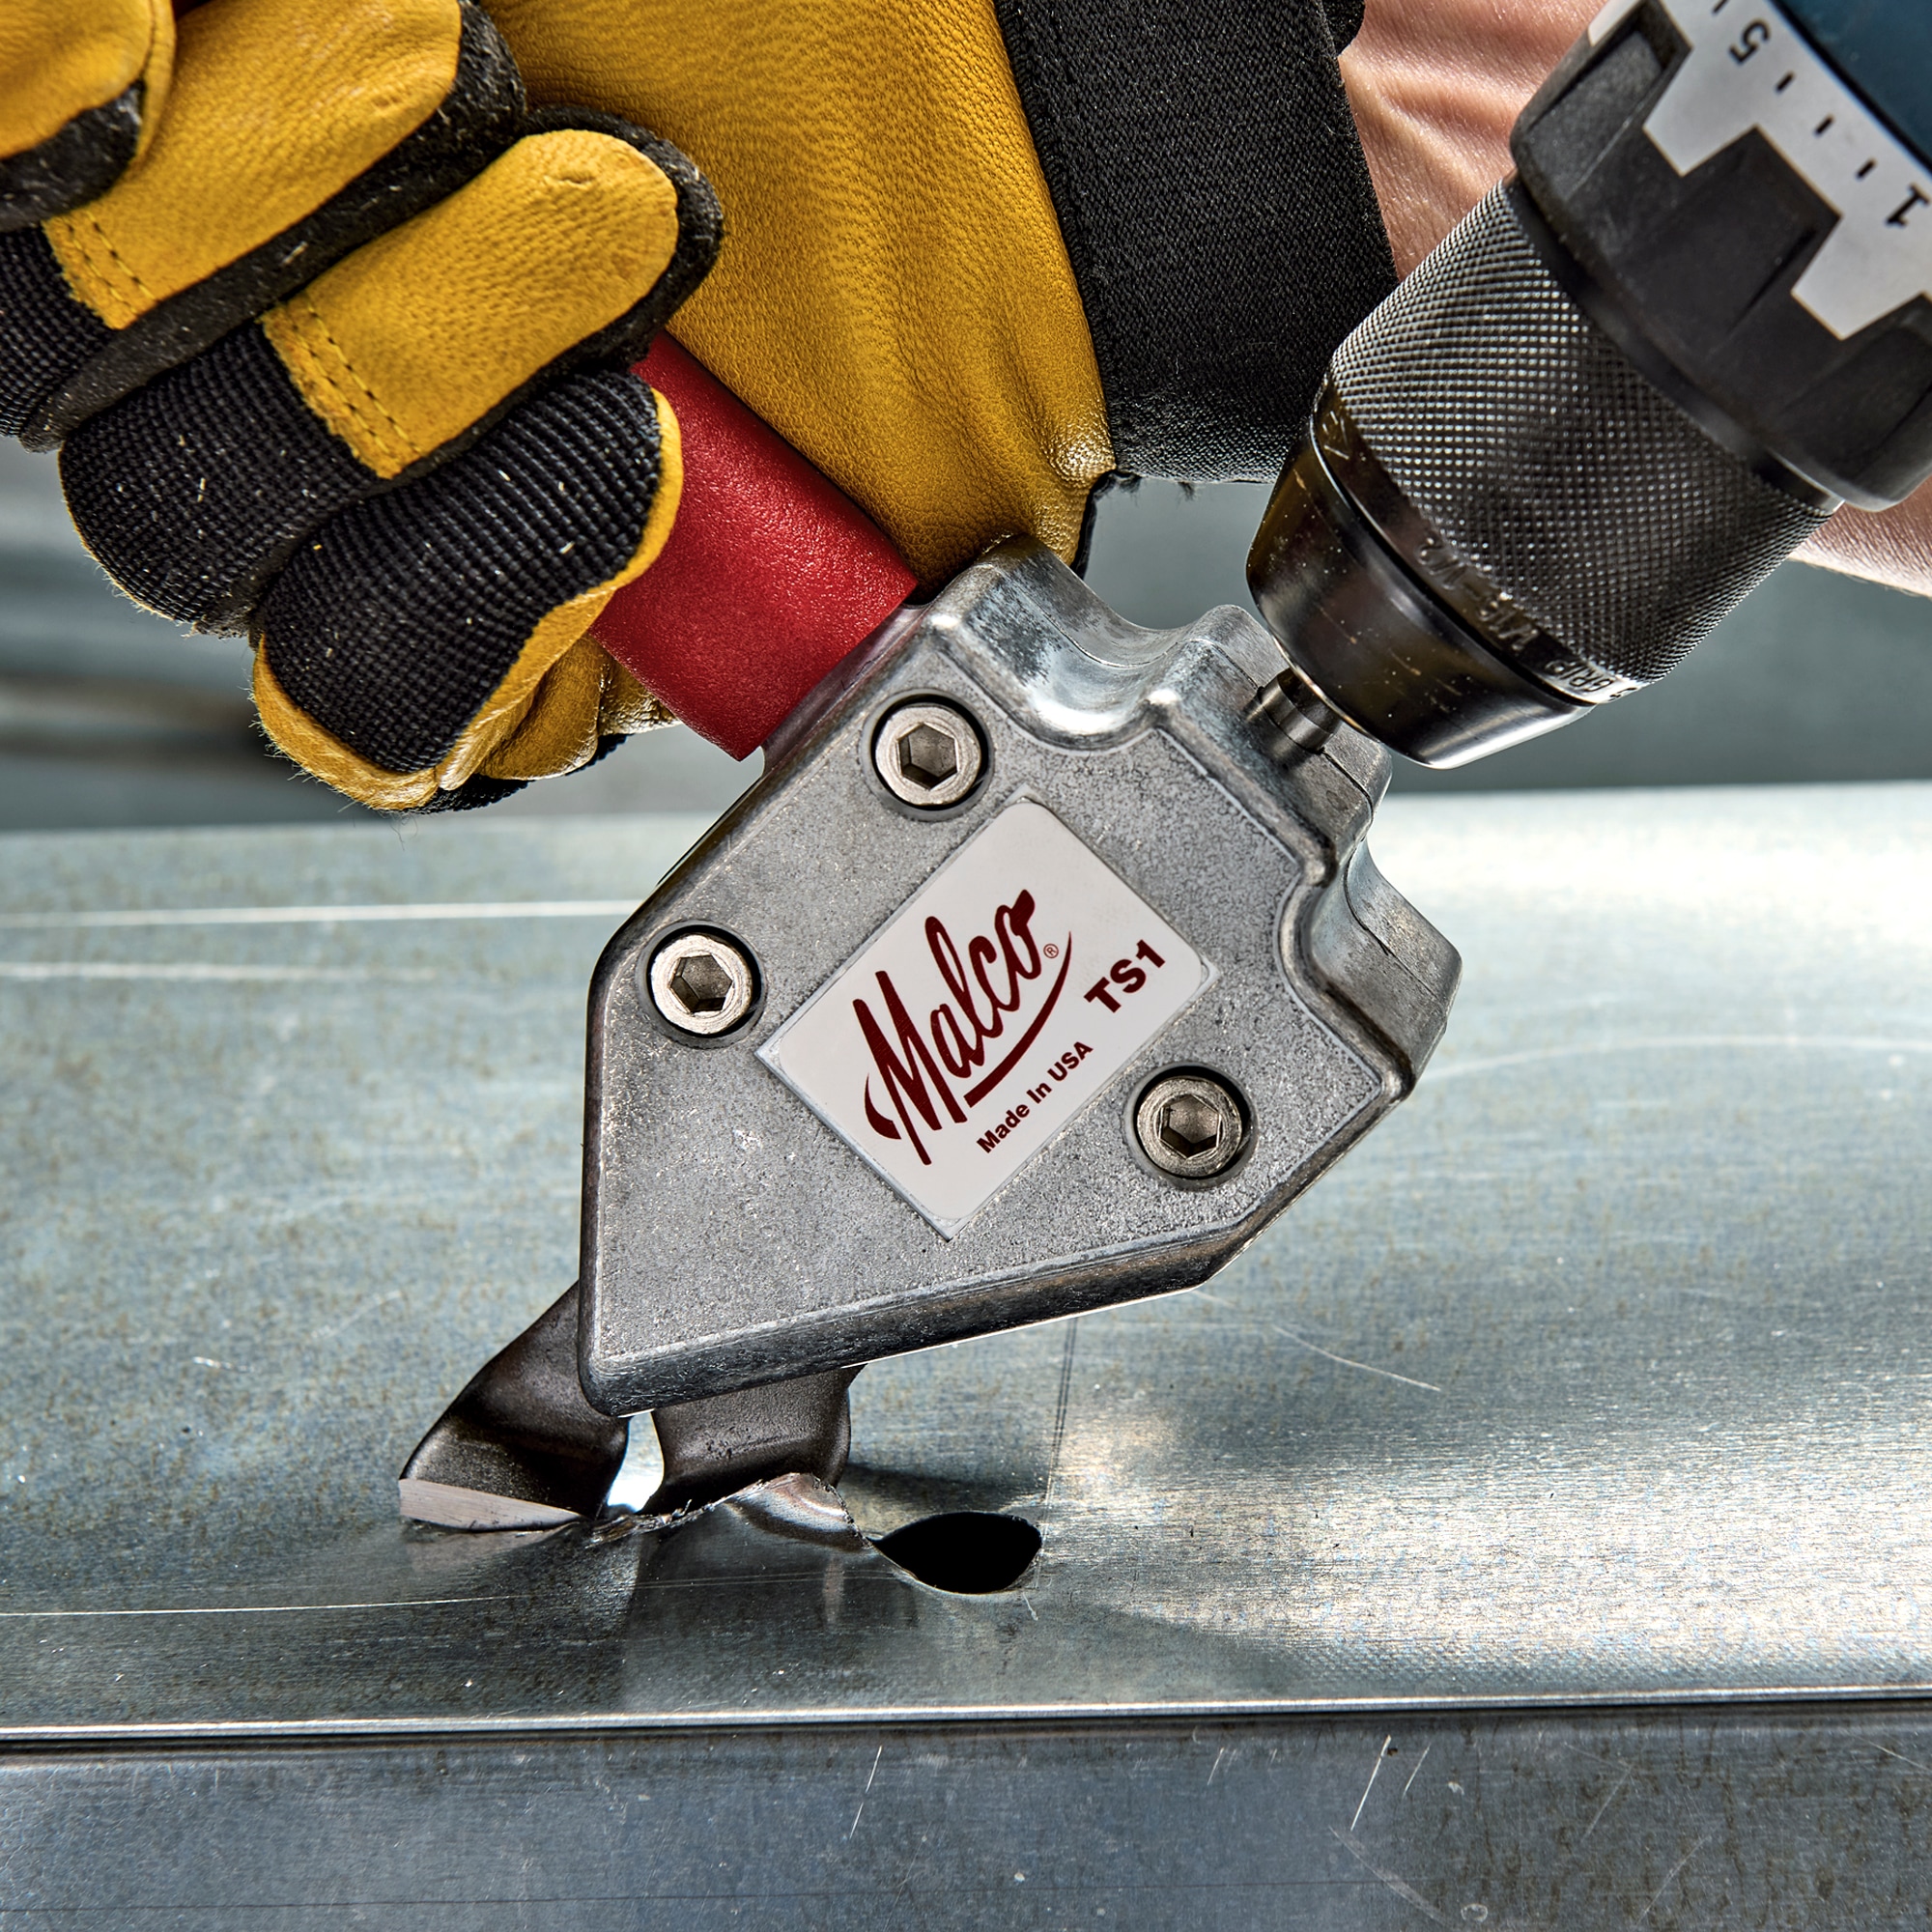 Malco Turbo Shear Metal Cutting Tool Box Cutter Attachment In The Drill